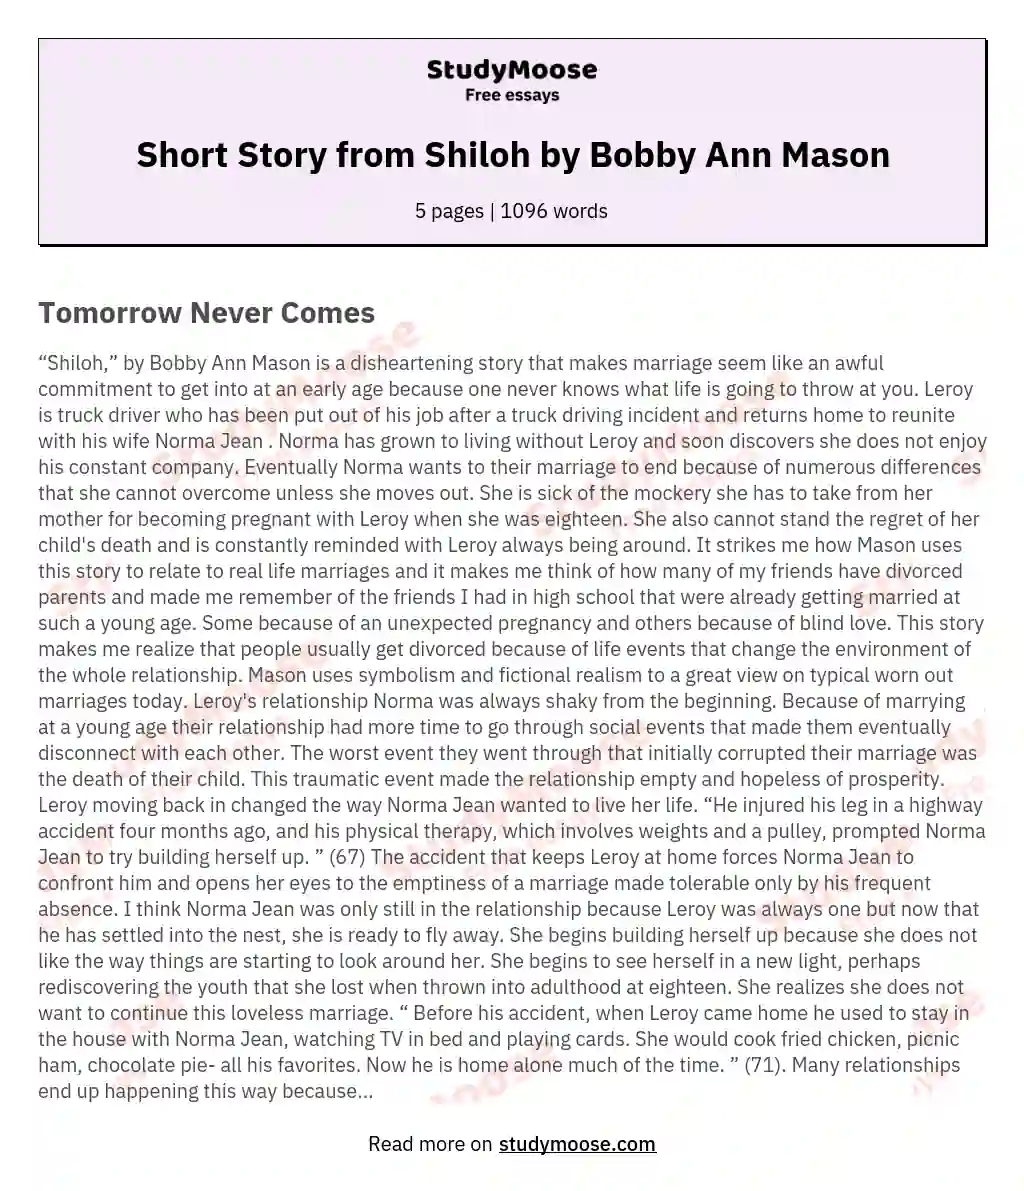 Short Story from Shiloh by Bobby Ann Mason essay